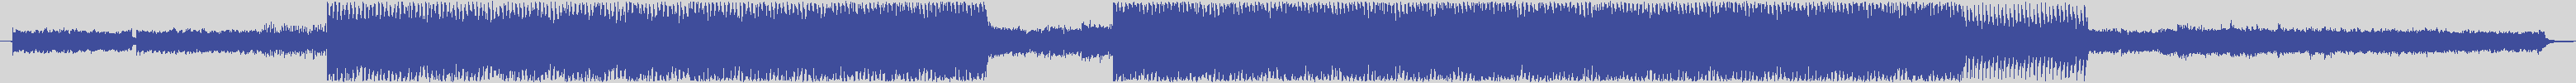 atomic_recordings [AR016] Kamasutra - Running Away [Red Sky Version] audio wave form